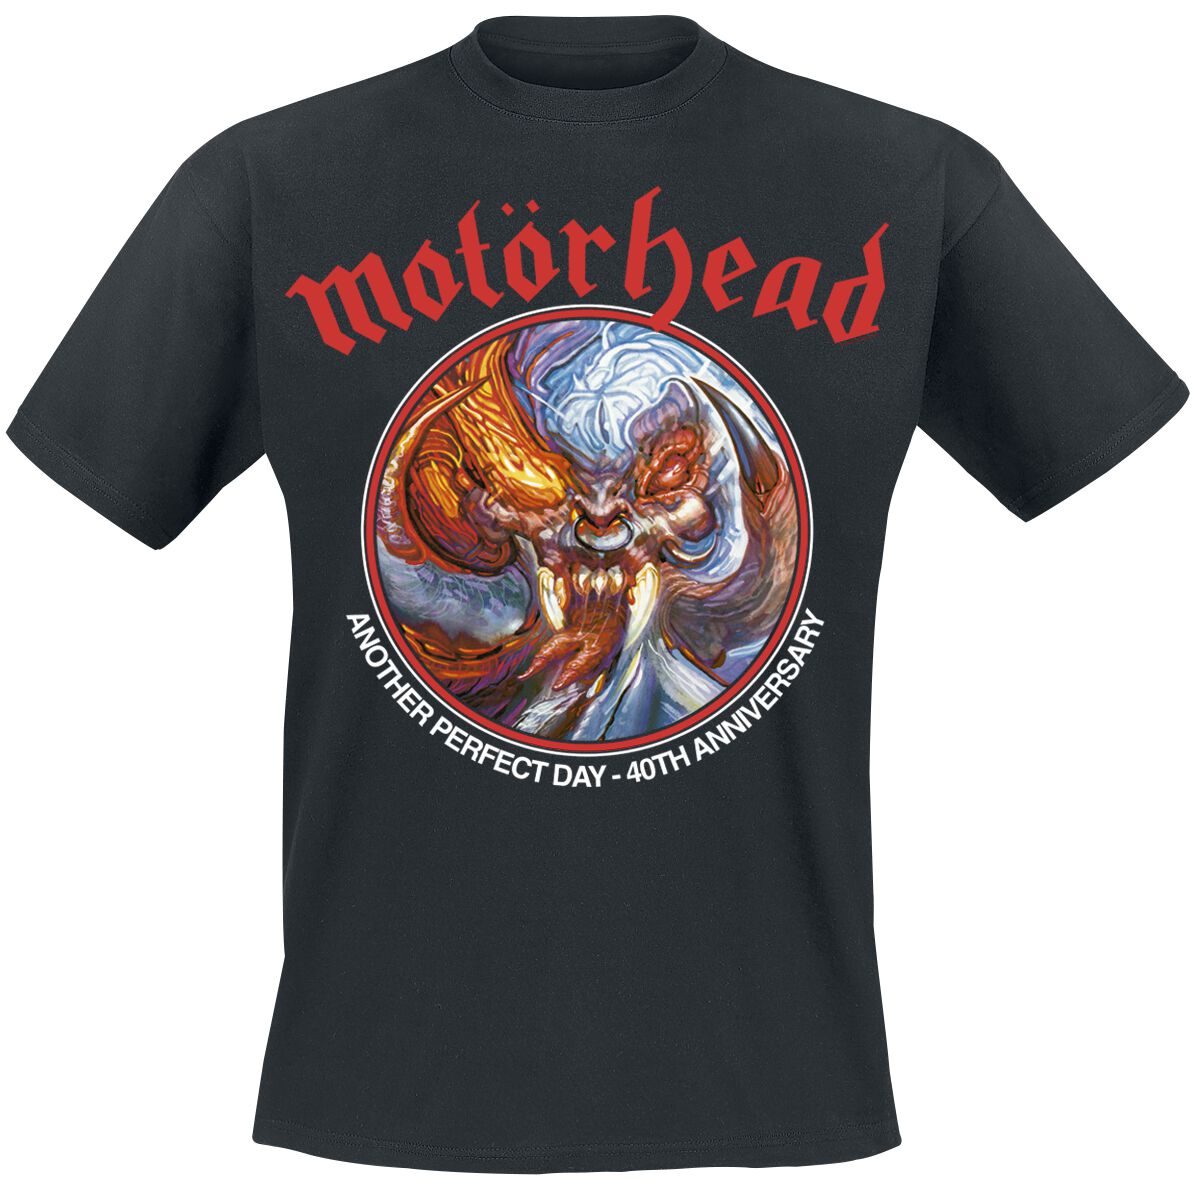 Motörhead Another Perfect Day Anniversary T-Shirt schwarz in 3XL